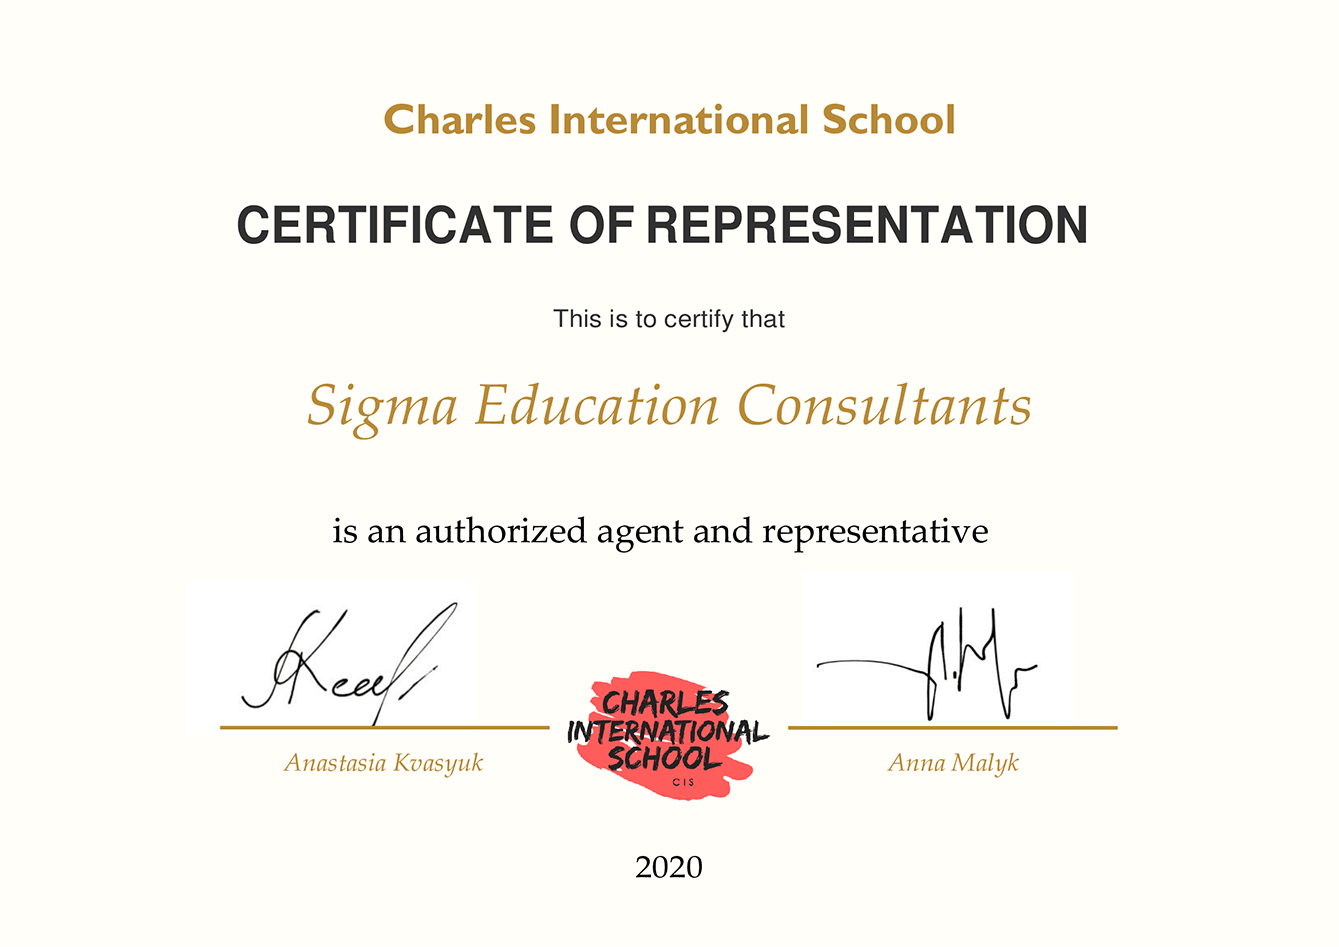 Charles International School